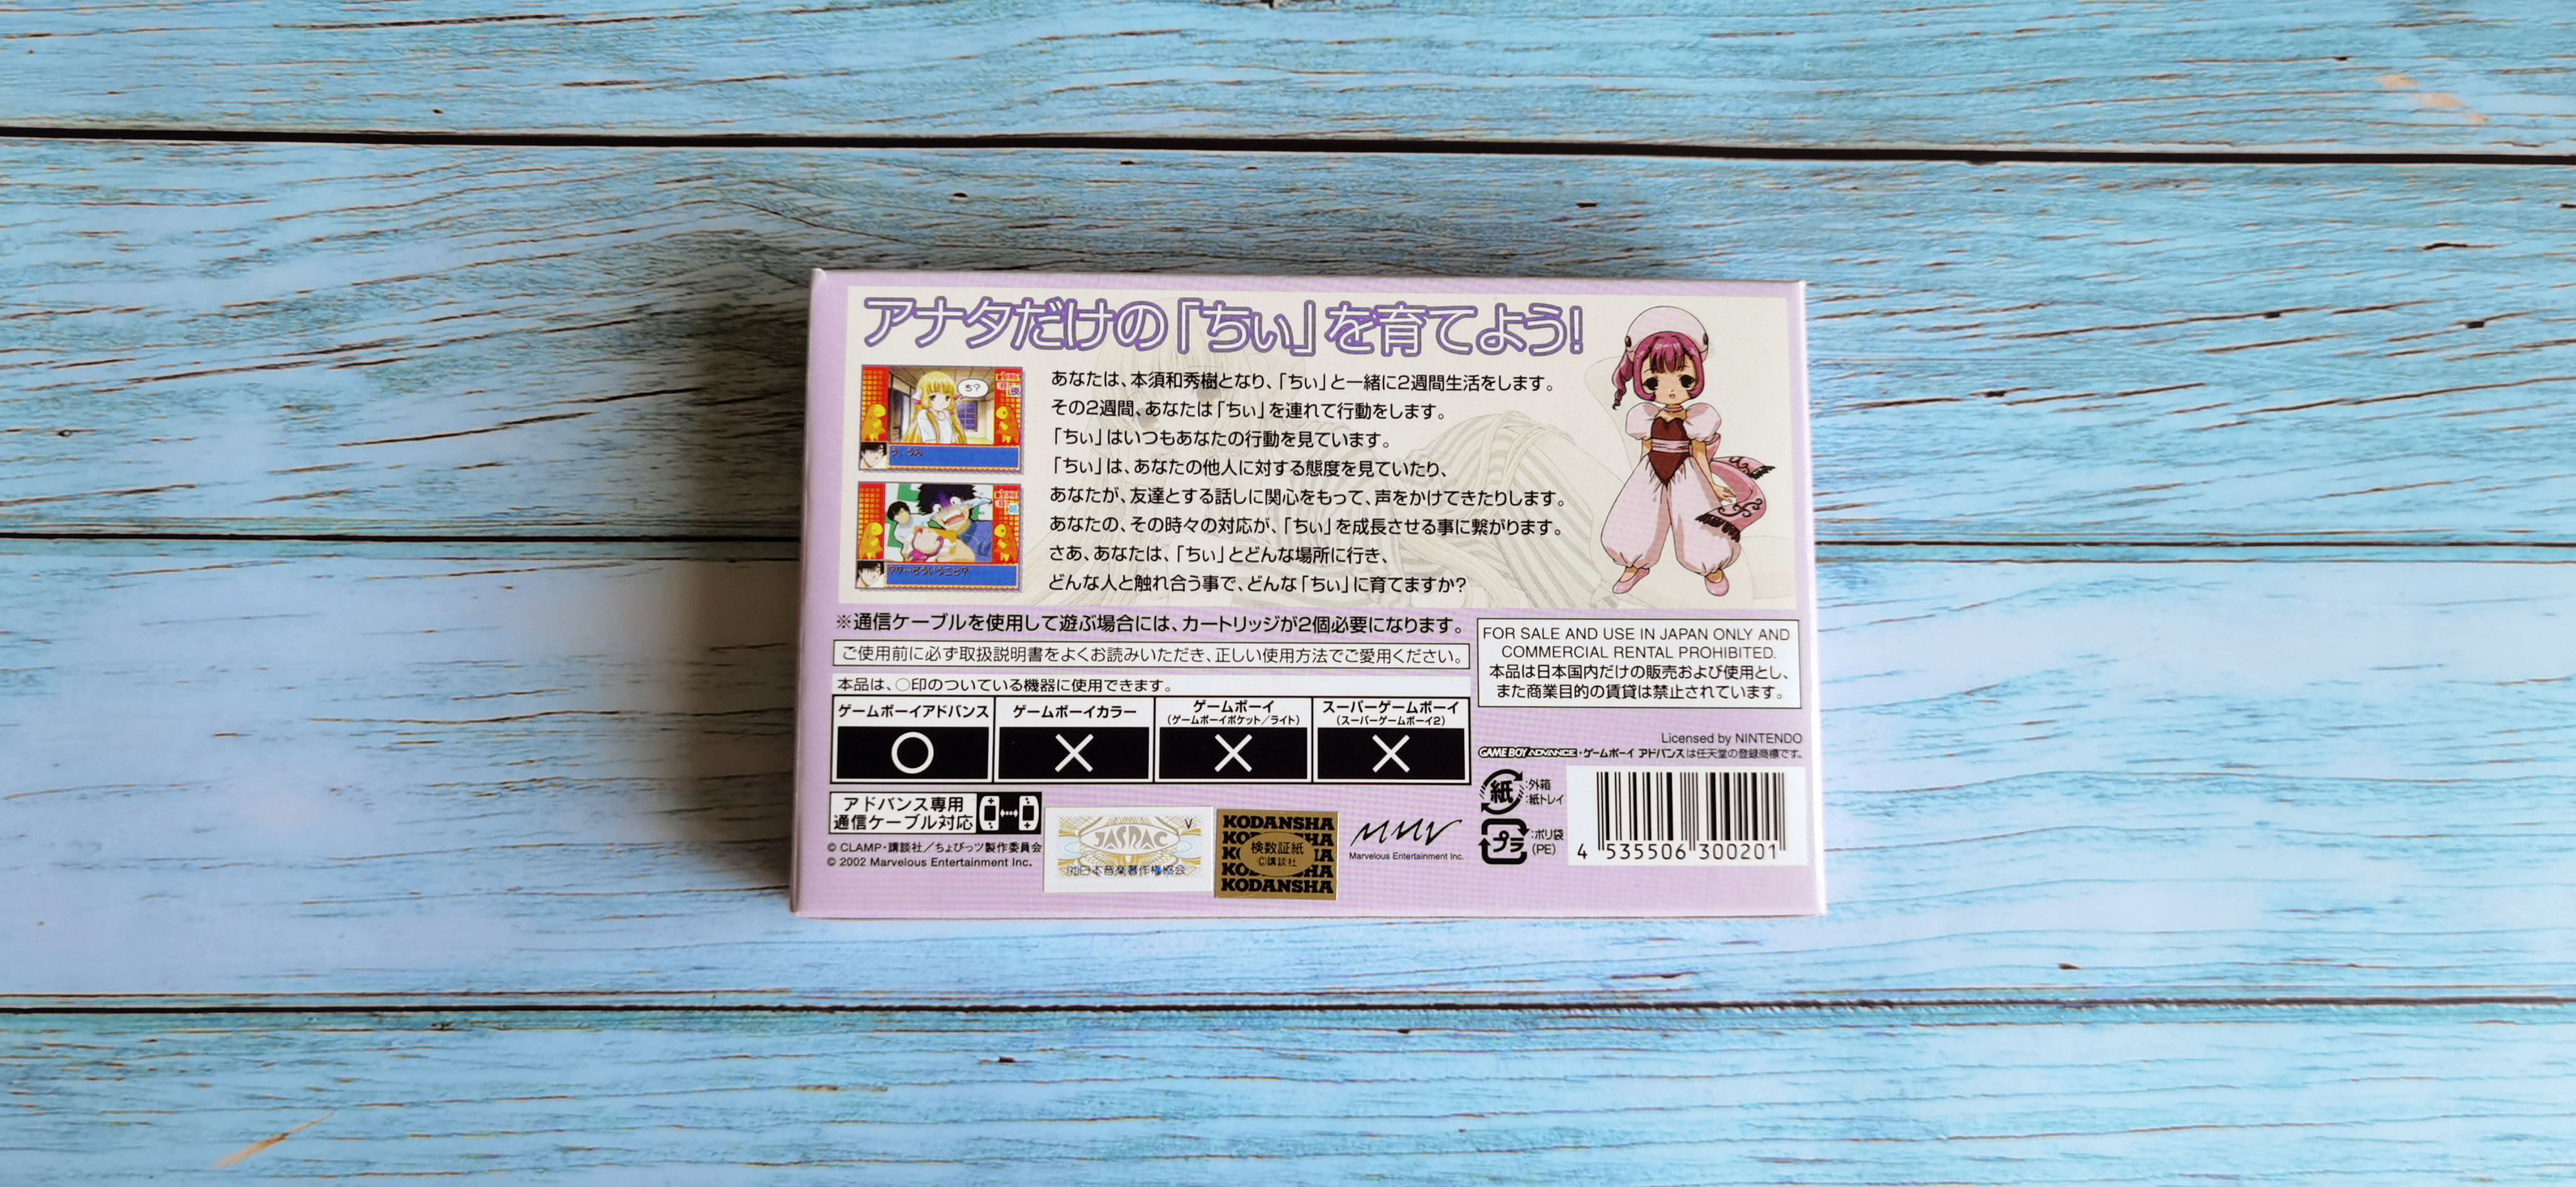 Game Boy Advance SP Chobits игра